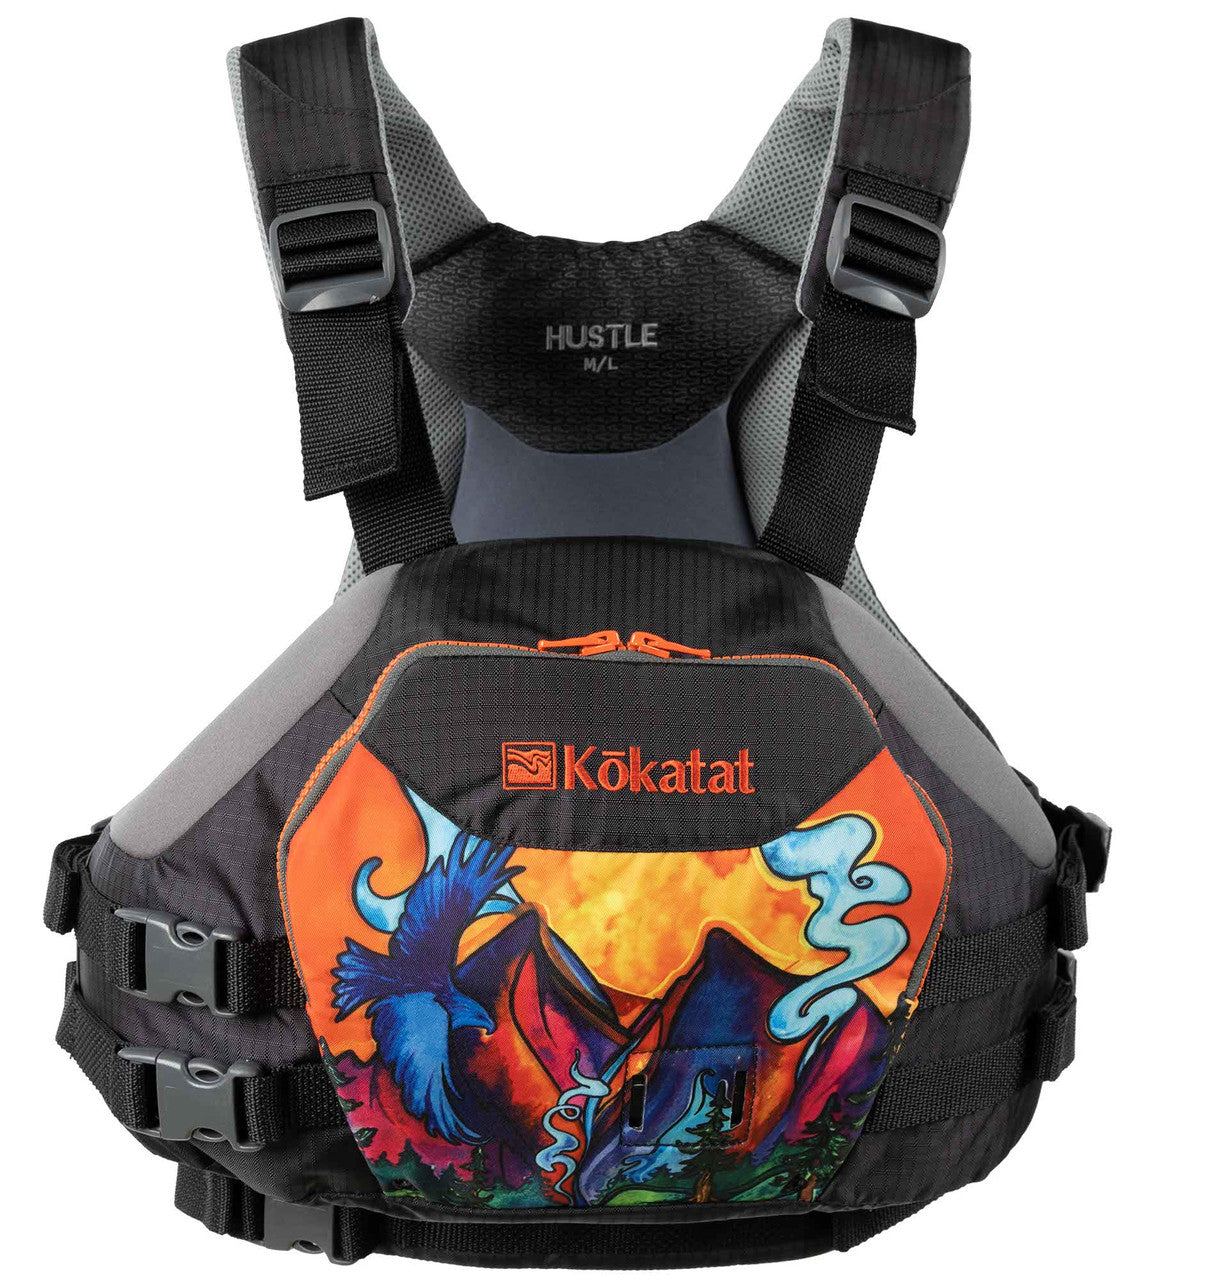 Kokatat HustleR Klamath Edition Rescue PFD